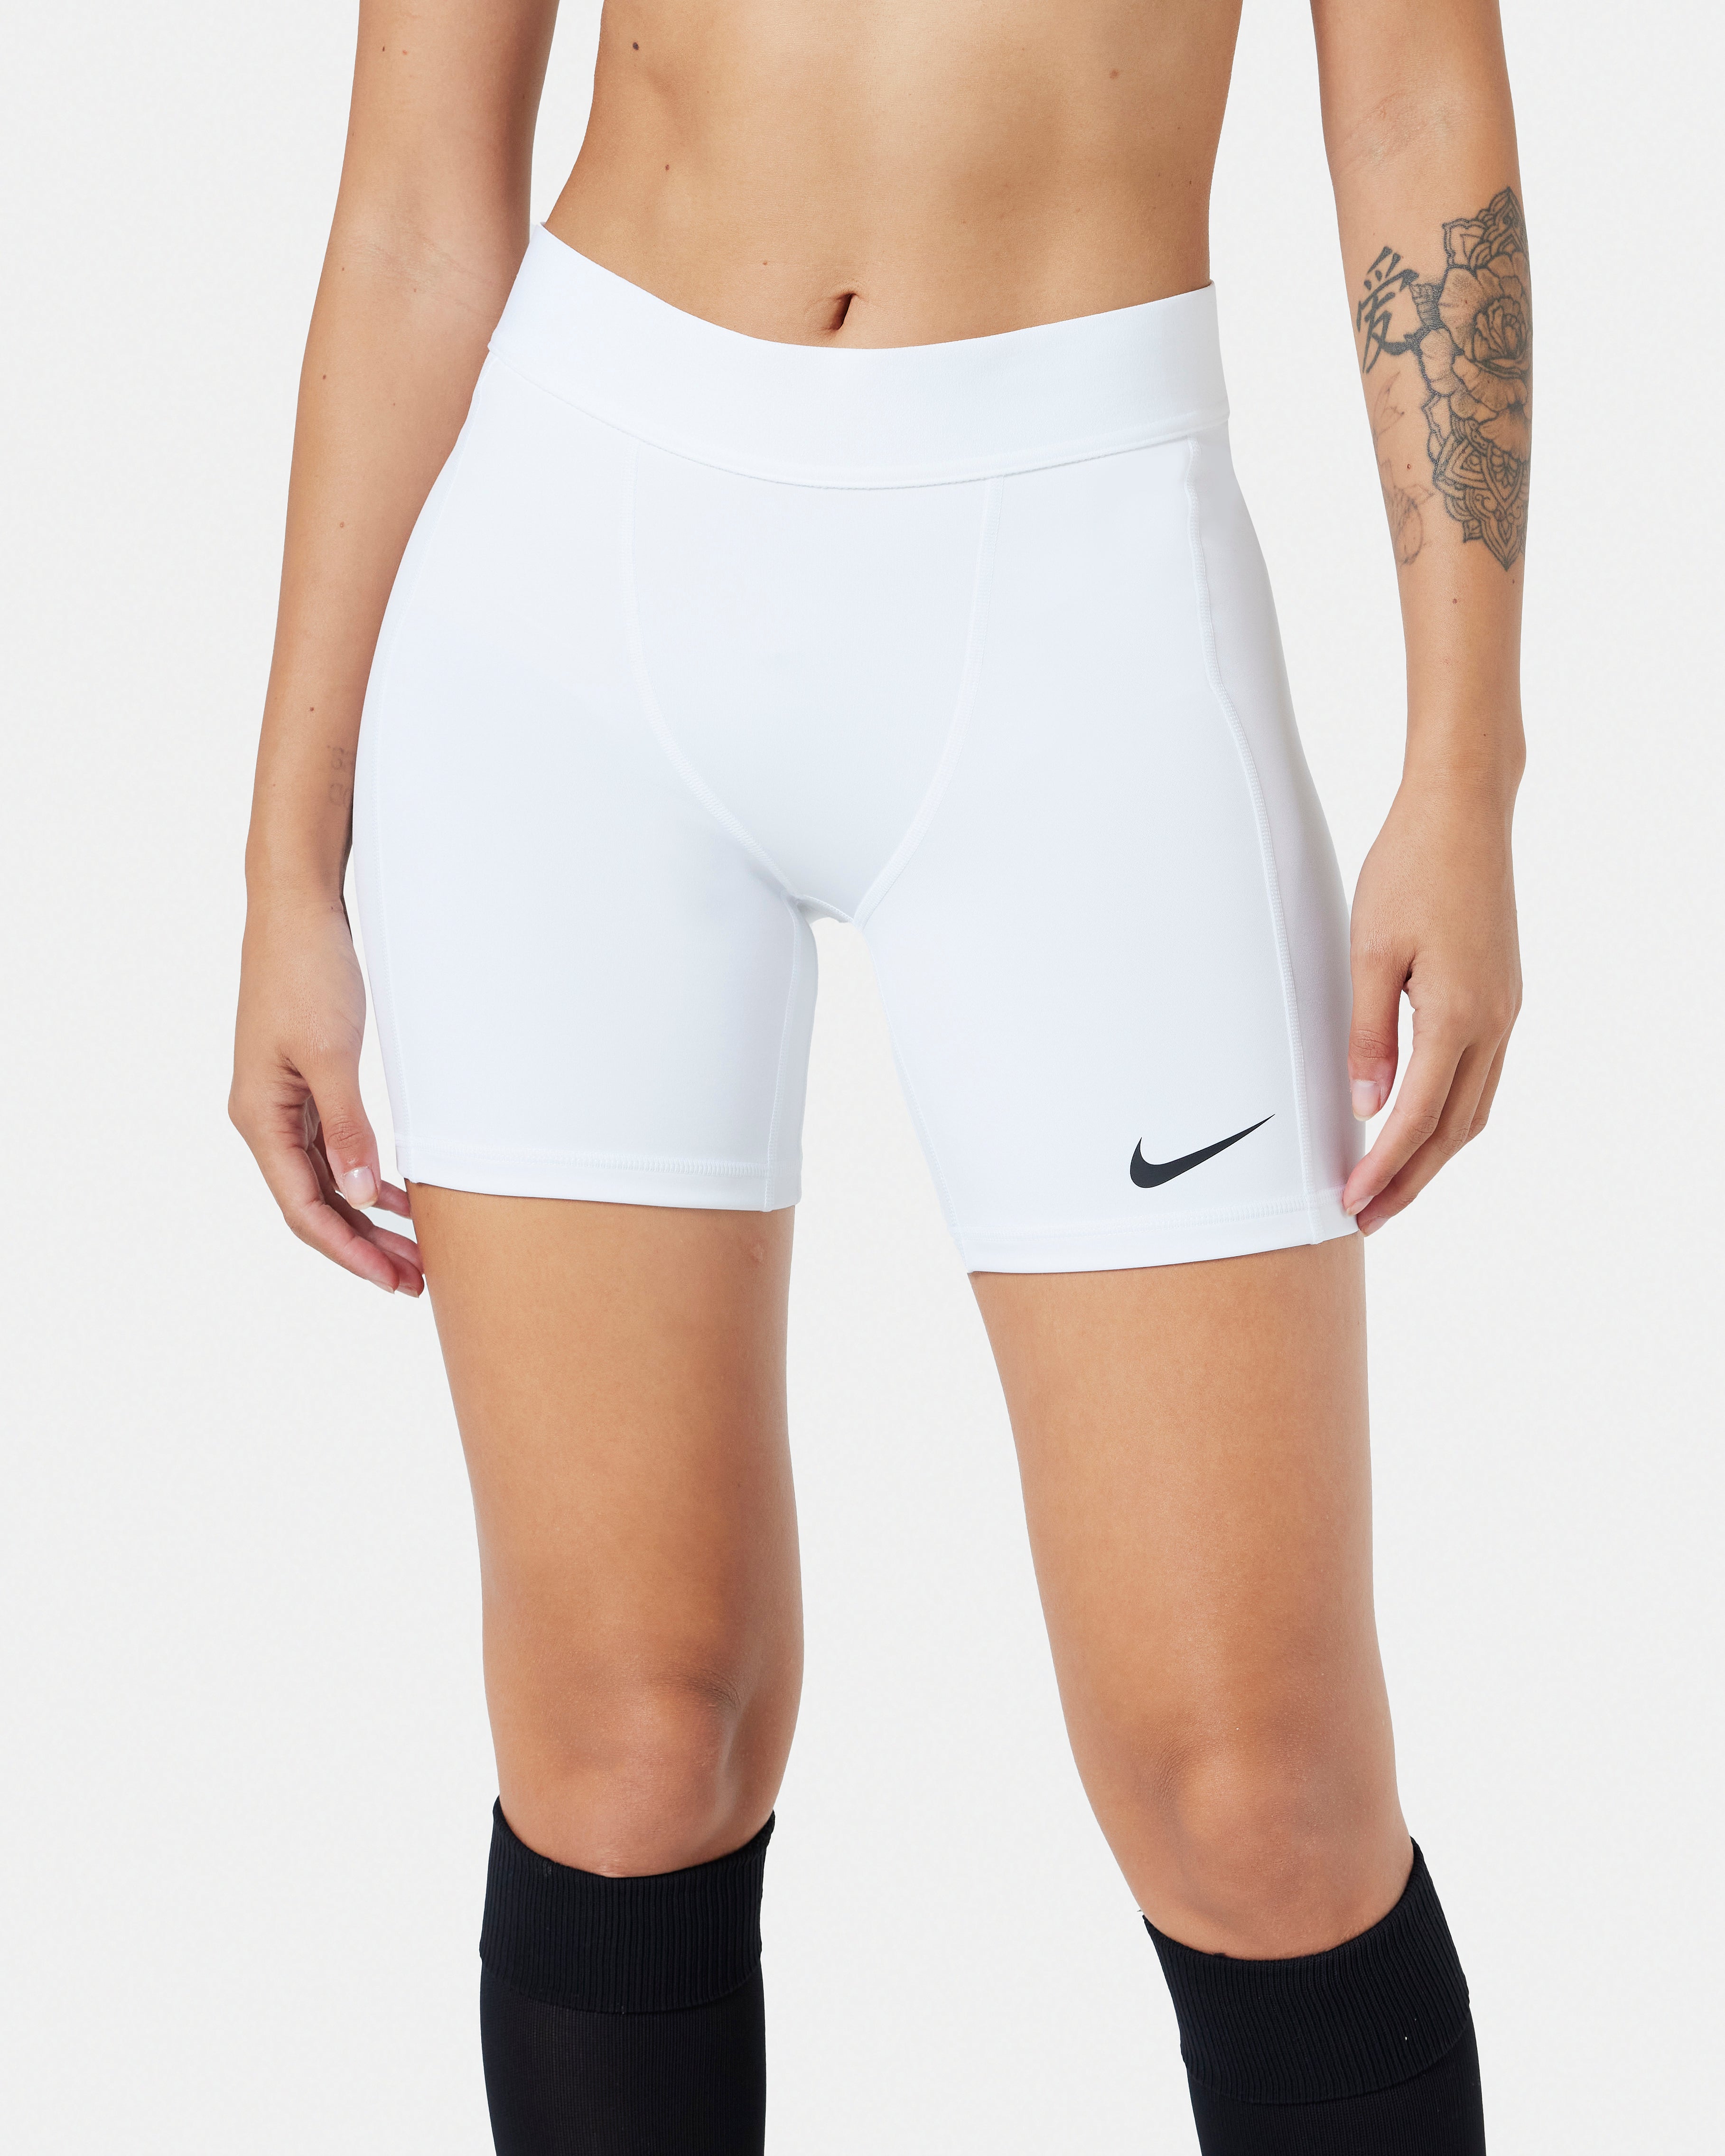 Nike Women's Academy Pro Pant 22